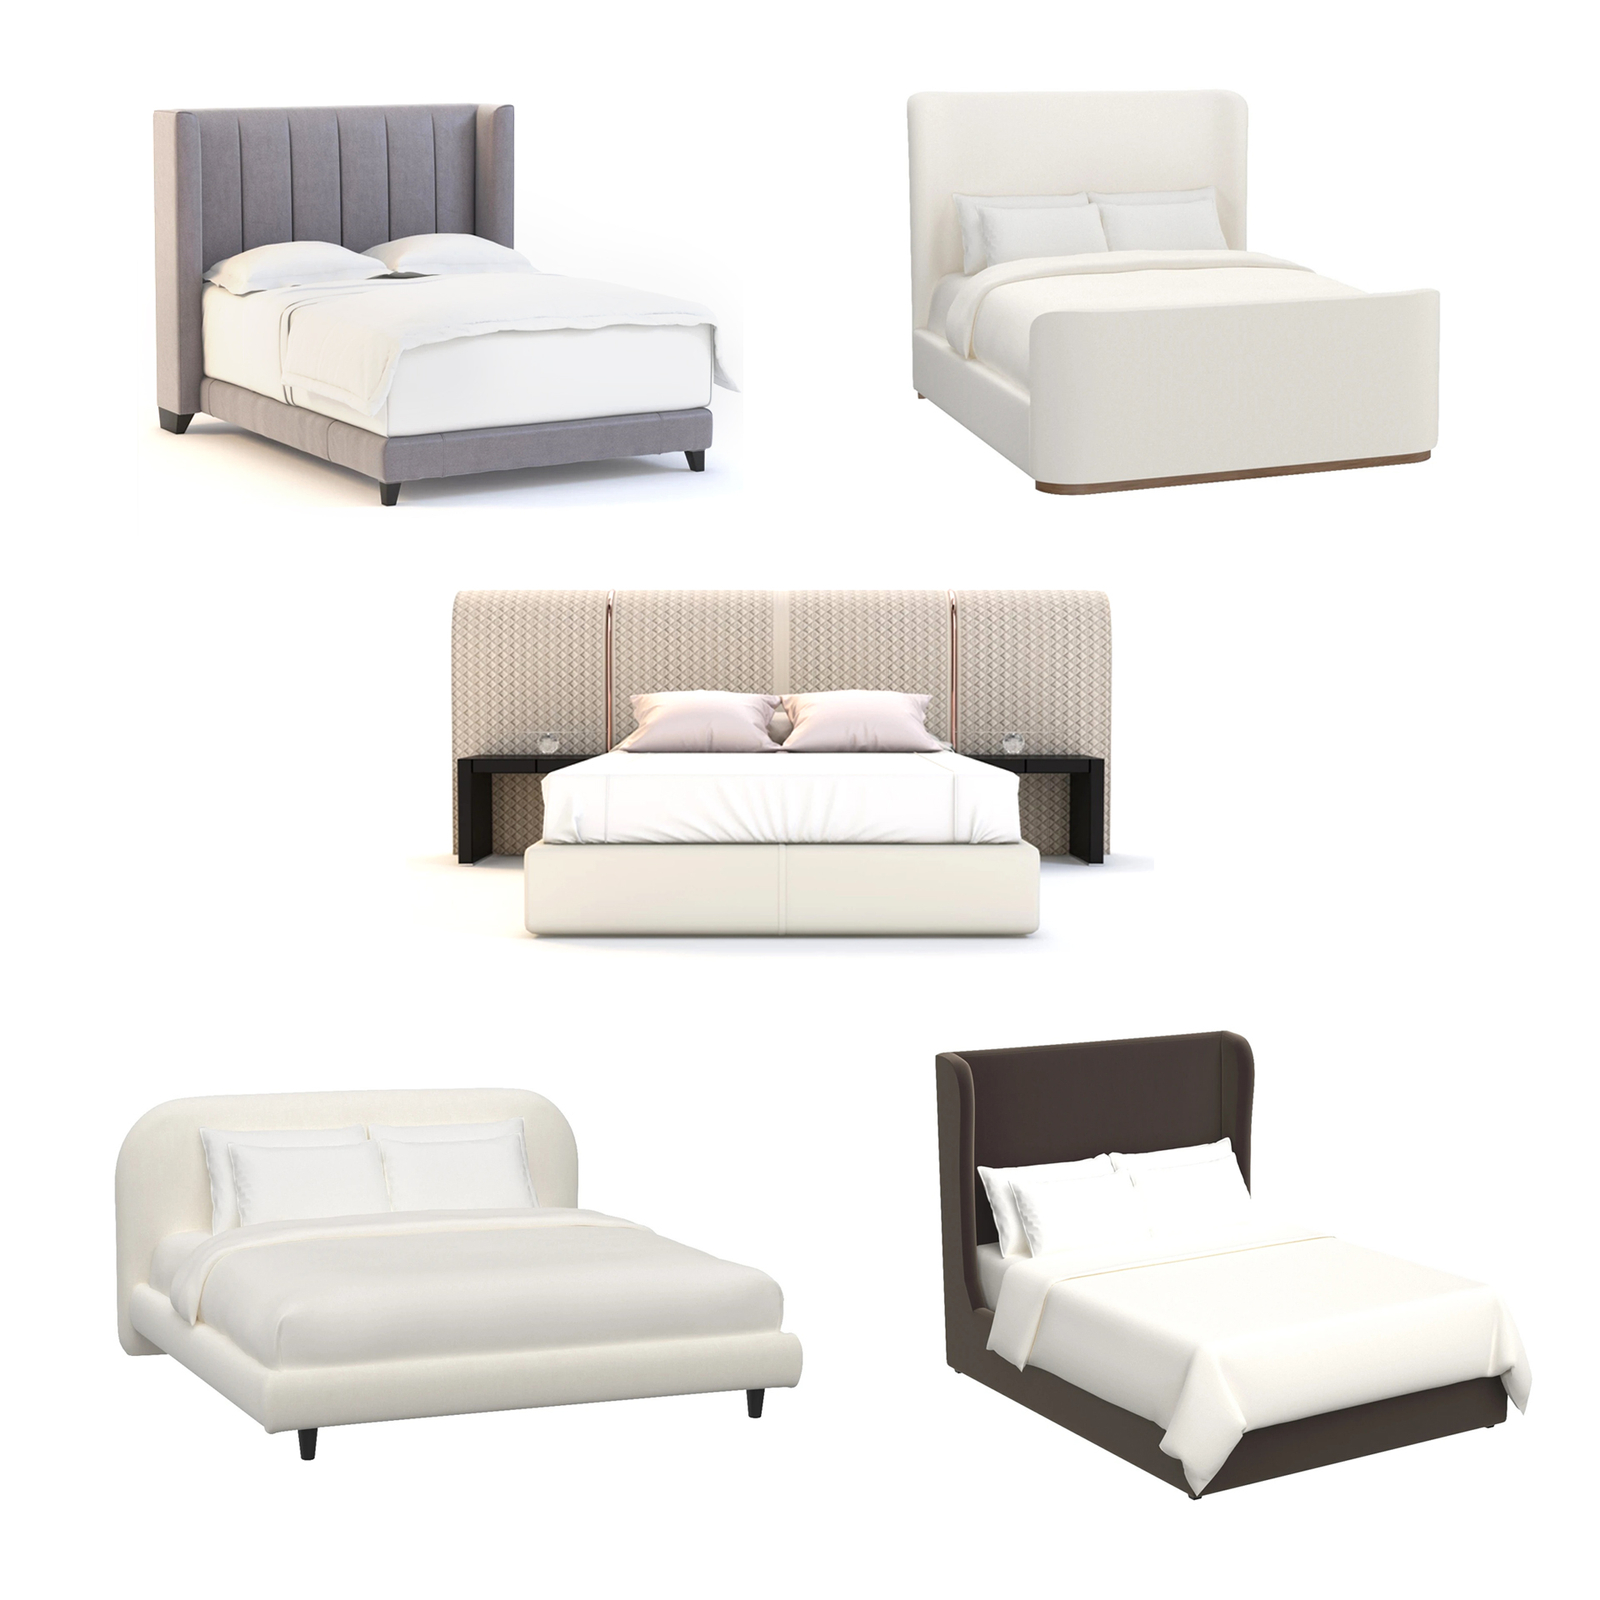 Collection of Five Luxury Platform Beds 3D Model_07